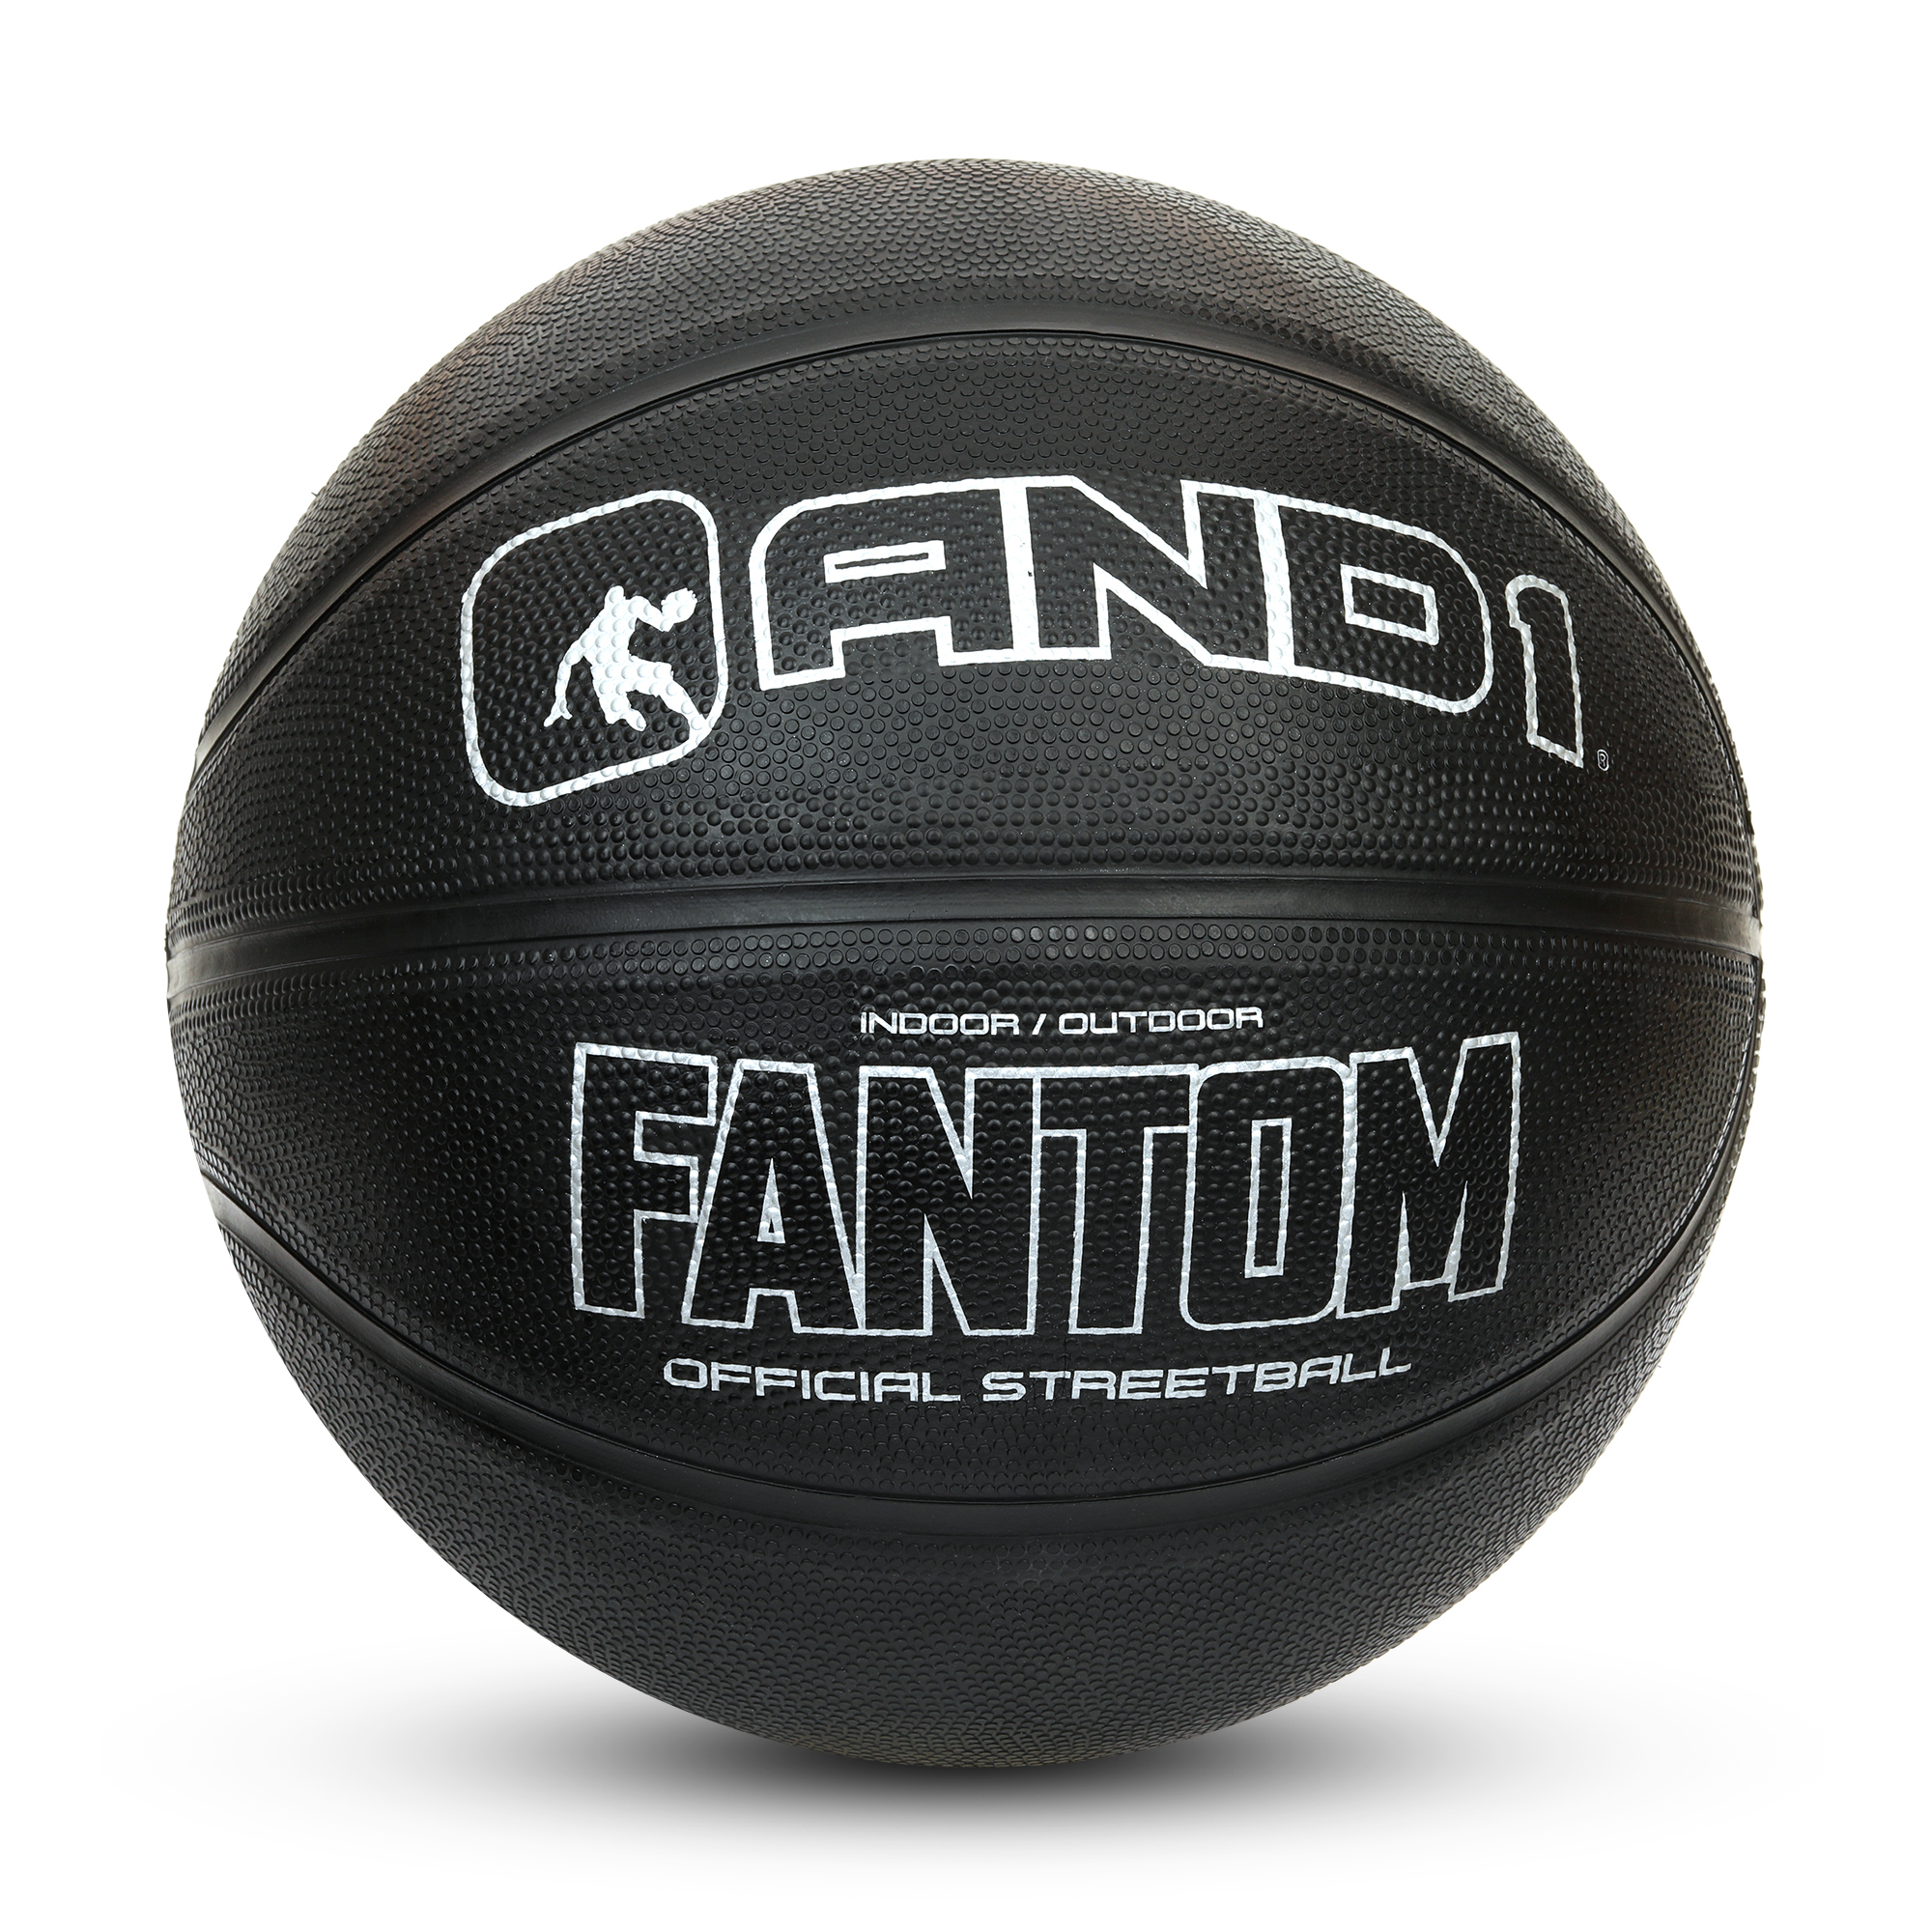 AND1 Fantom Rubber Basketball, Black, 29.5" - image 1 of 5